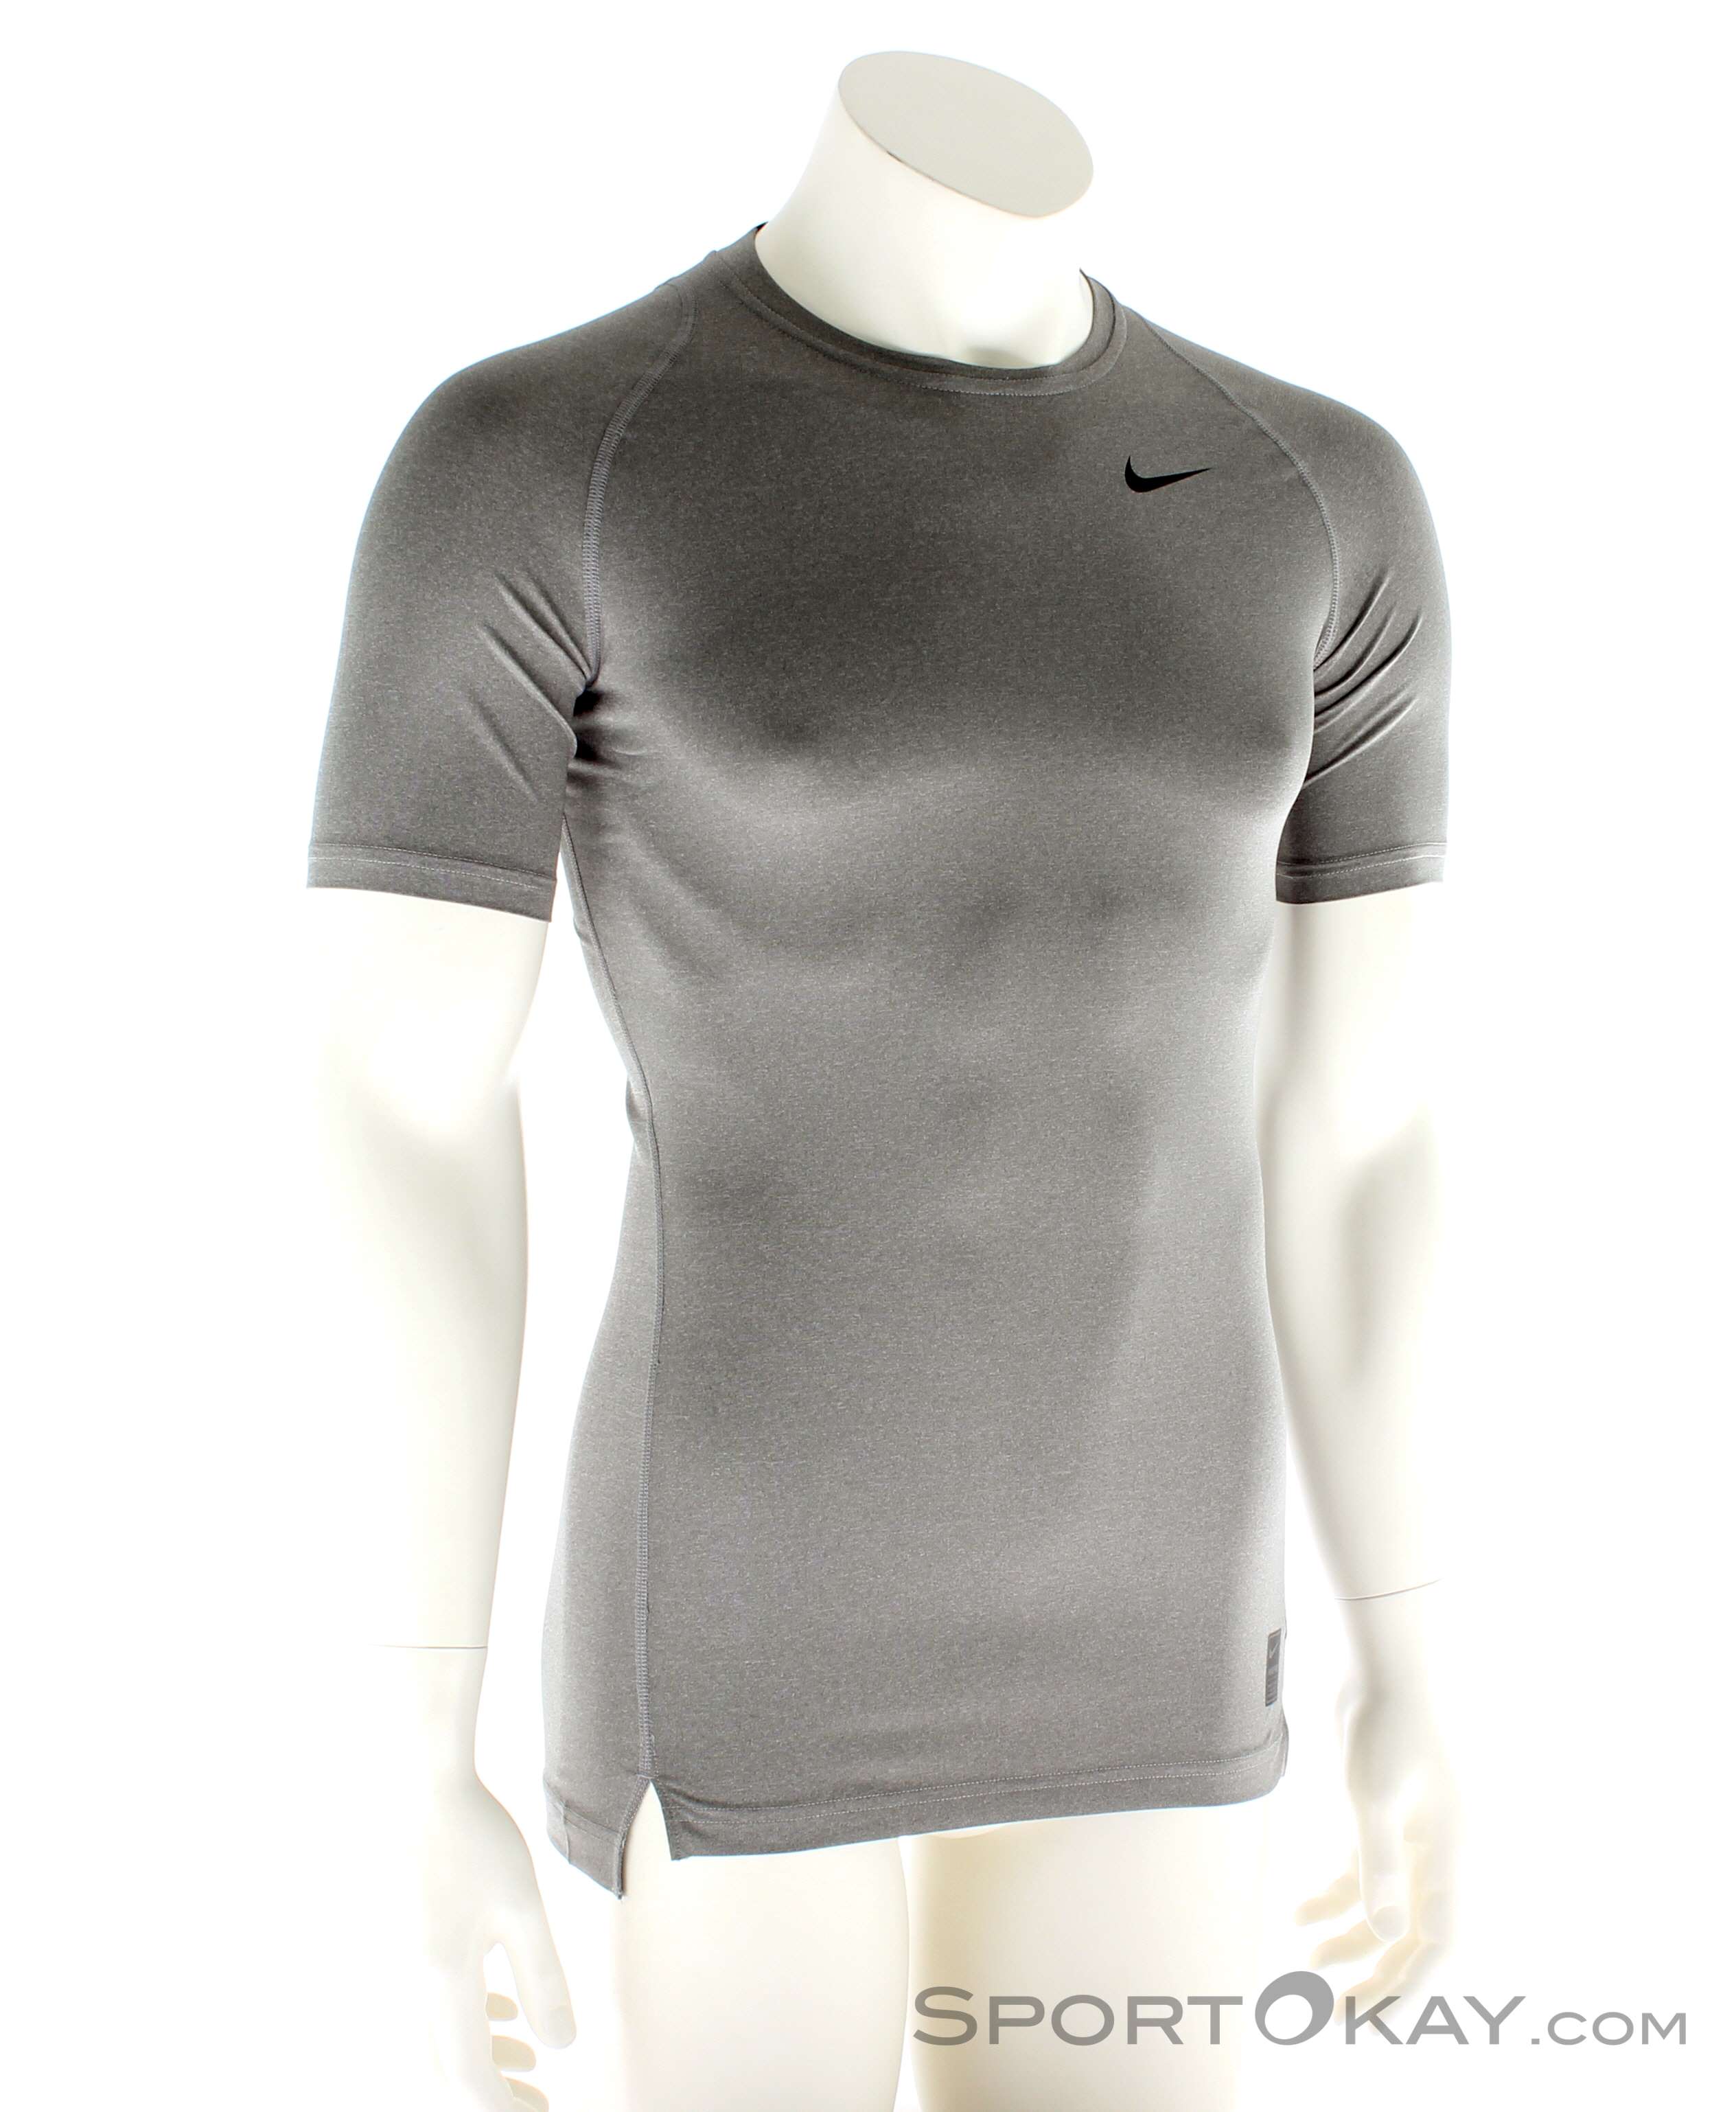 Nike Pro Cool Compression Mens Fitness Shirt - Shirts & T-Shirts